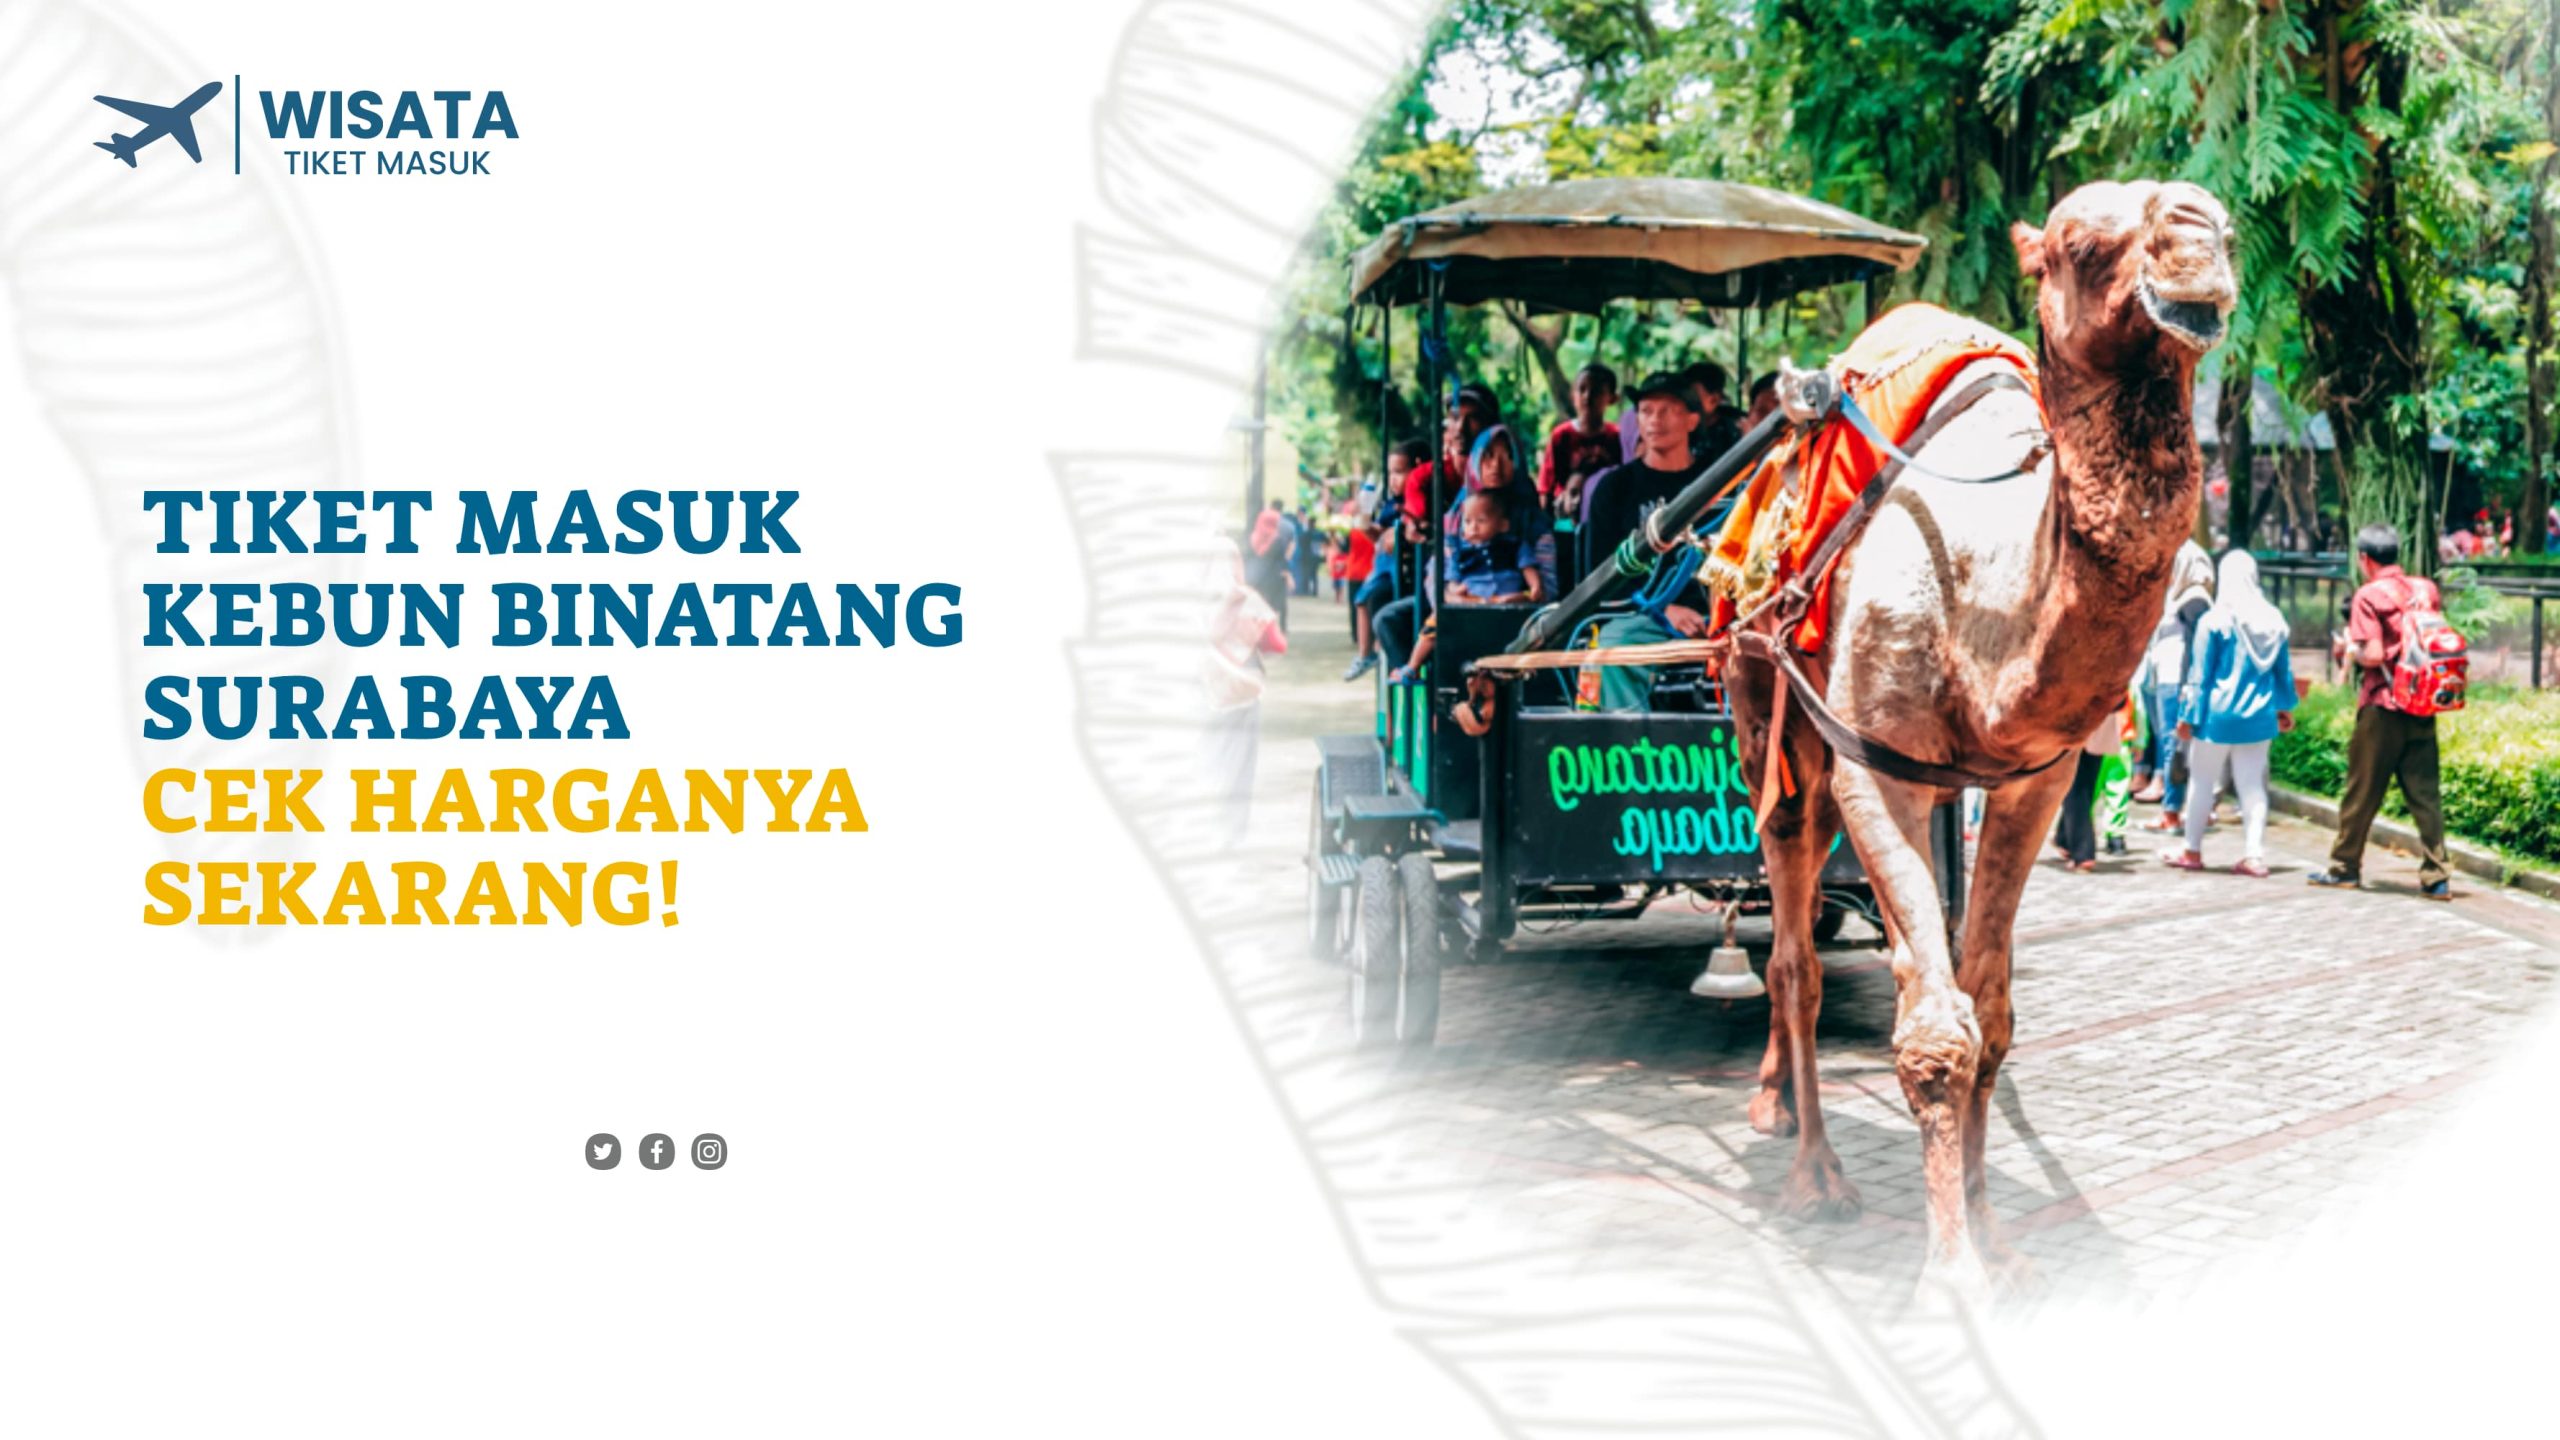 Tiket Masuk Kebun Binatang Surabaya